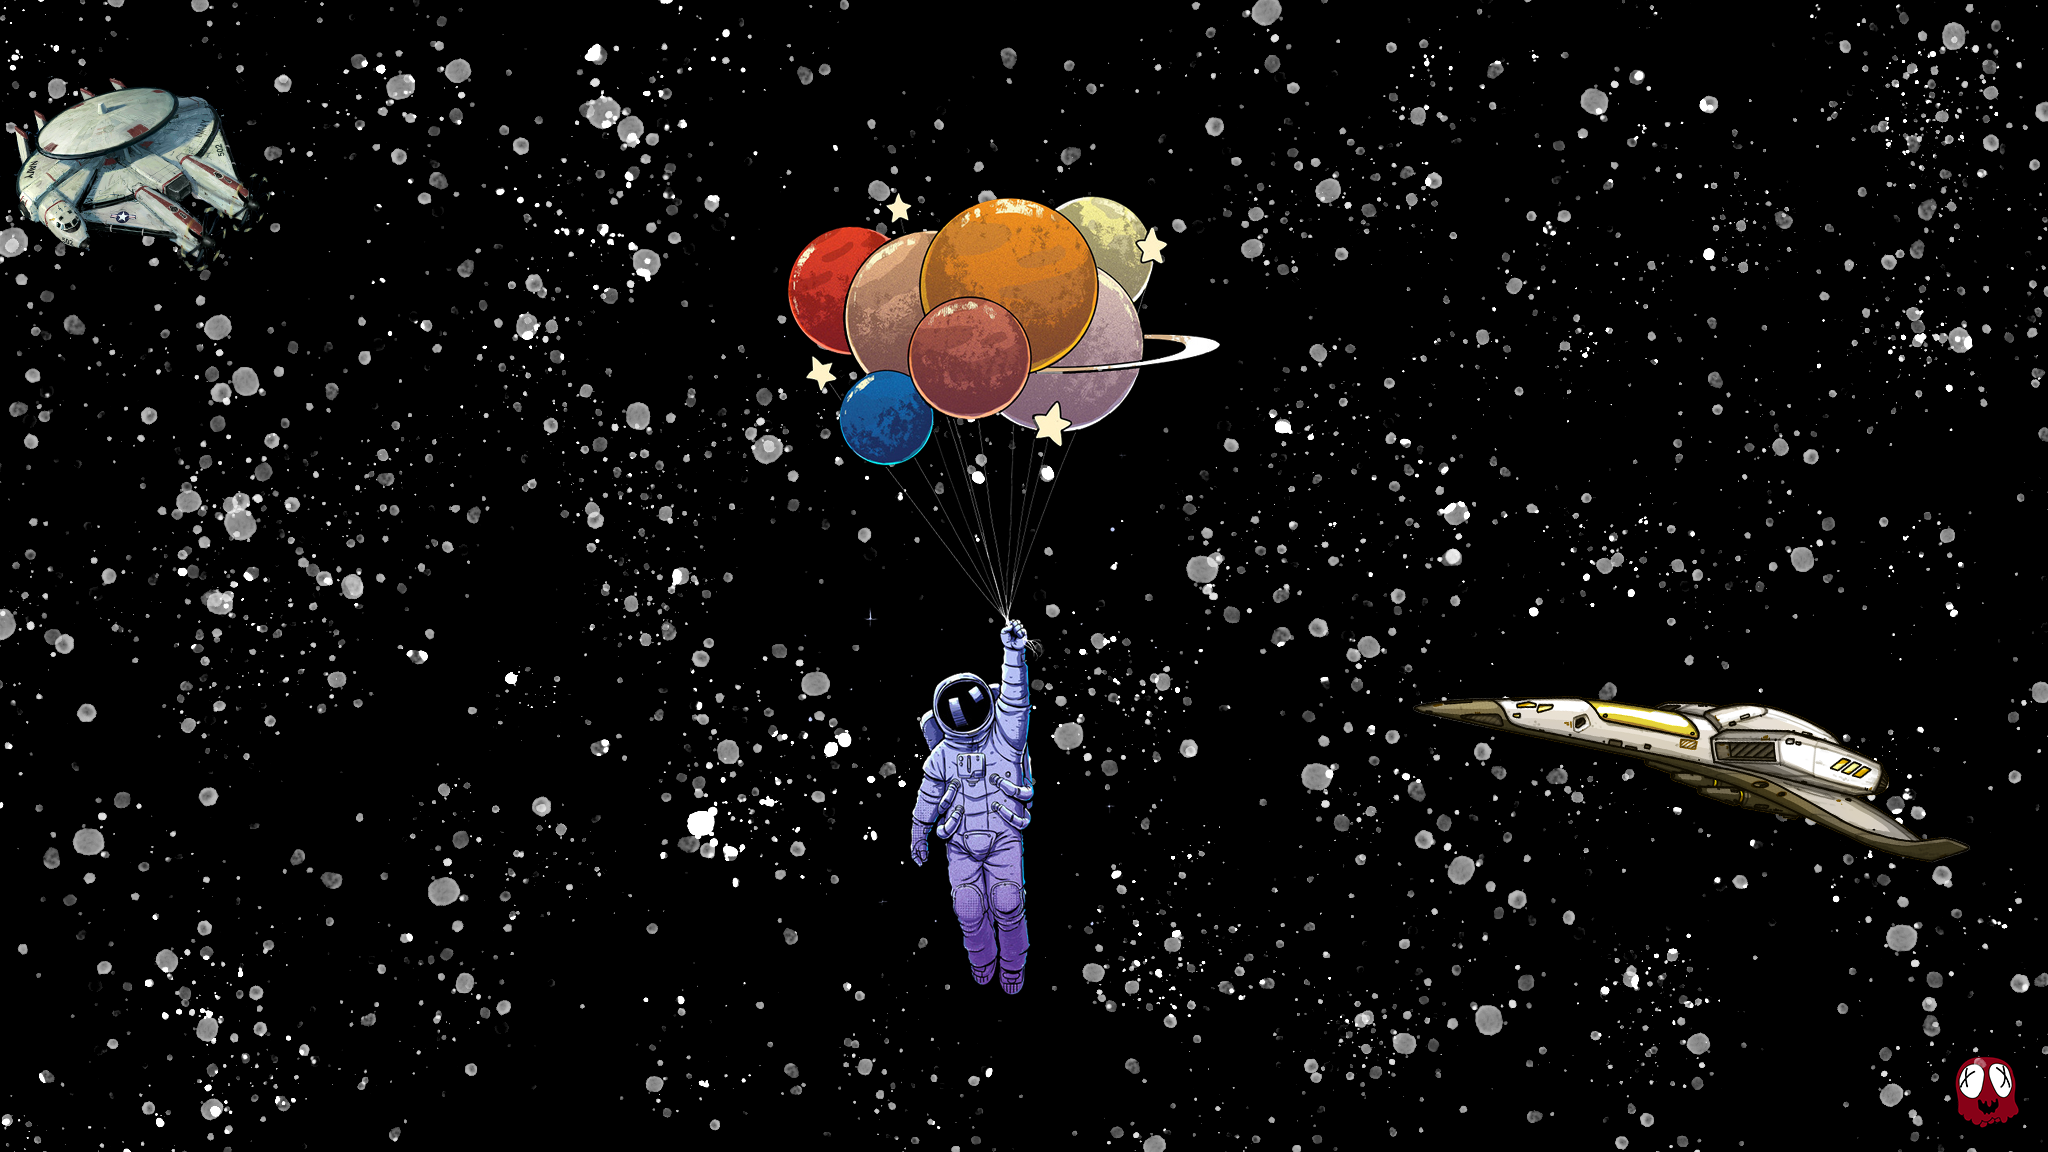 General 2048x1152 space astronaut planet cartoon Millennium Falcon